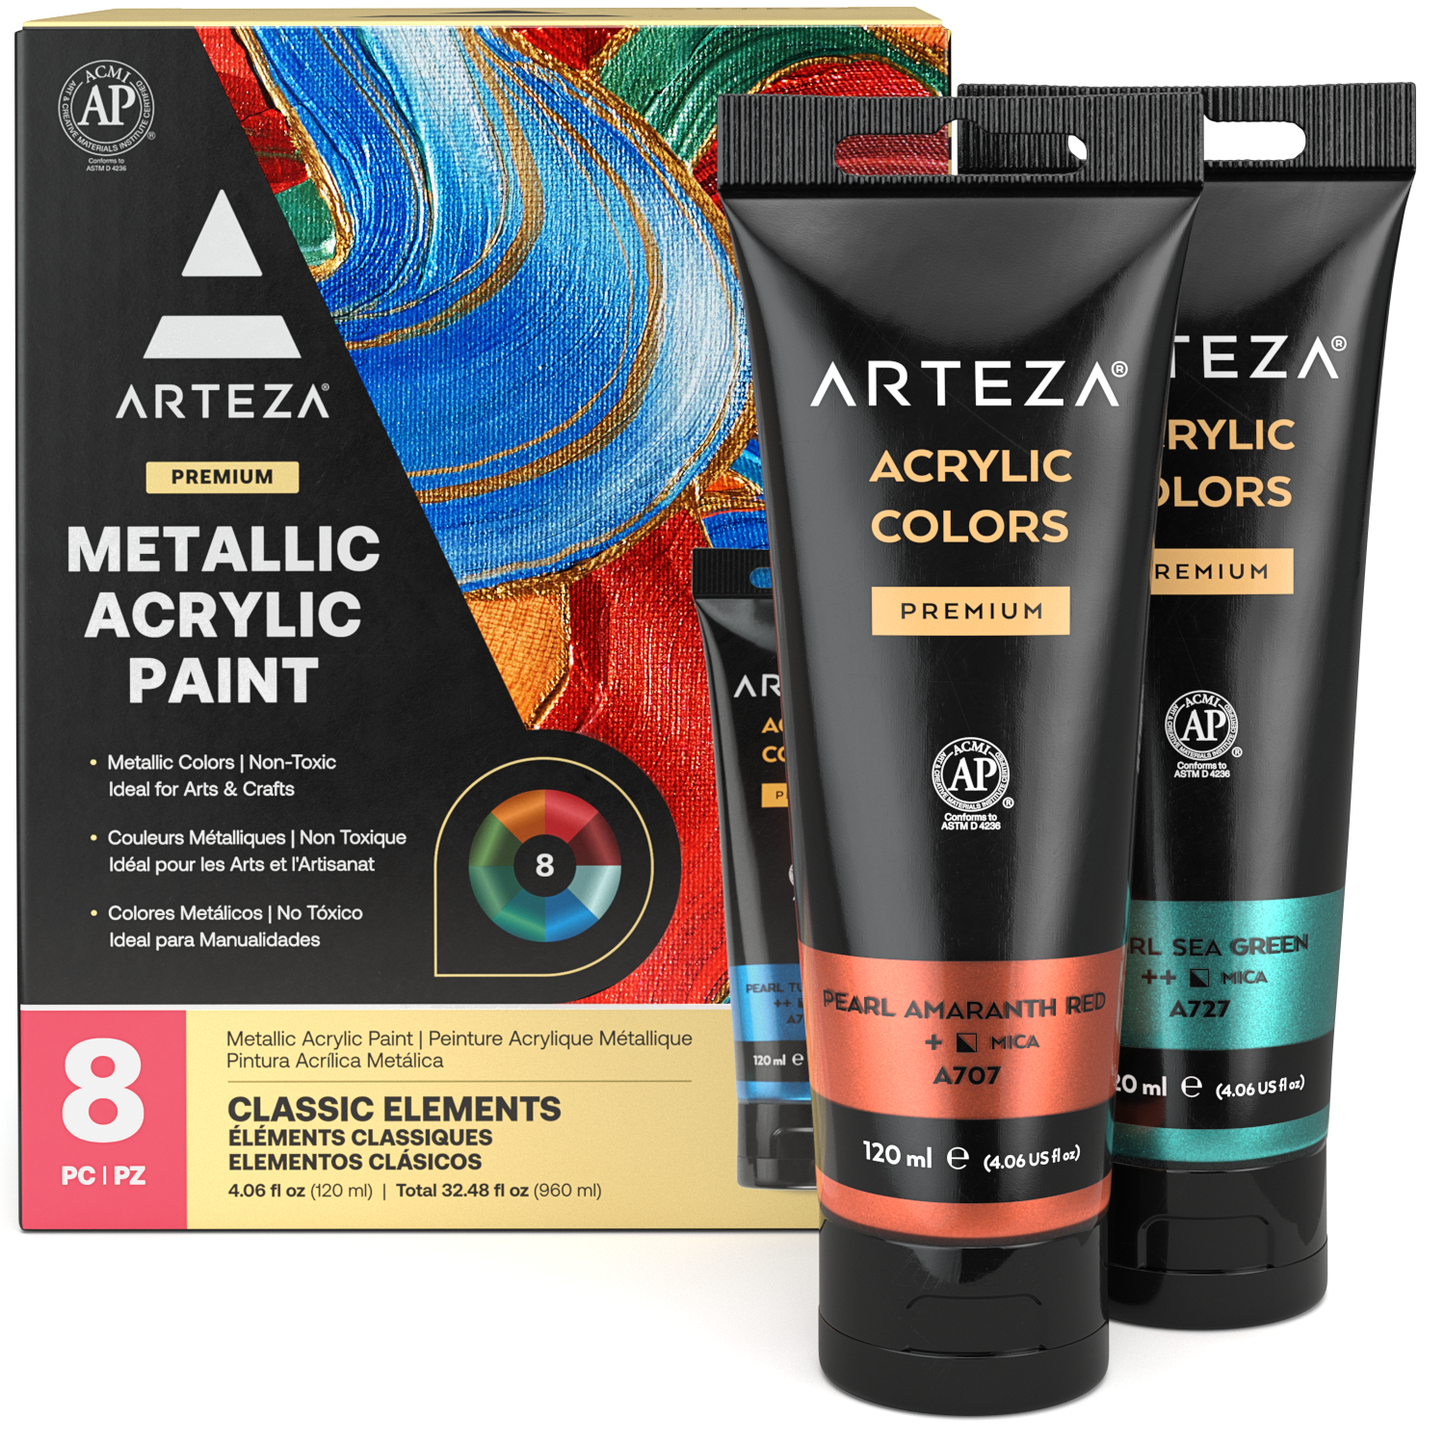 Metallic Acrylic Paint Color bottle pack 100ml - Malaysia Clay Art